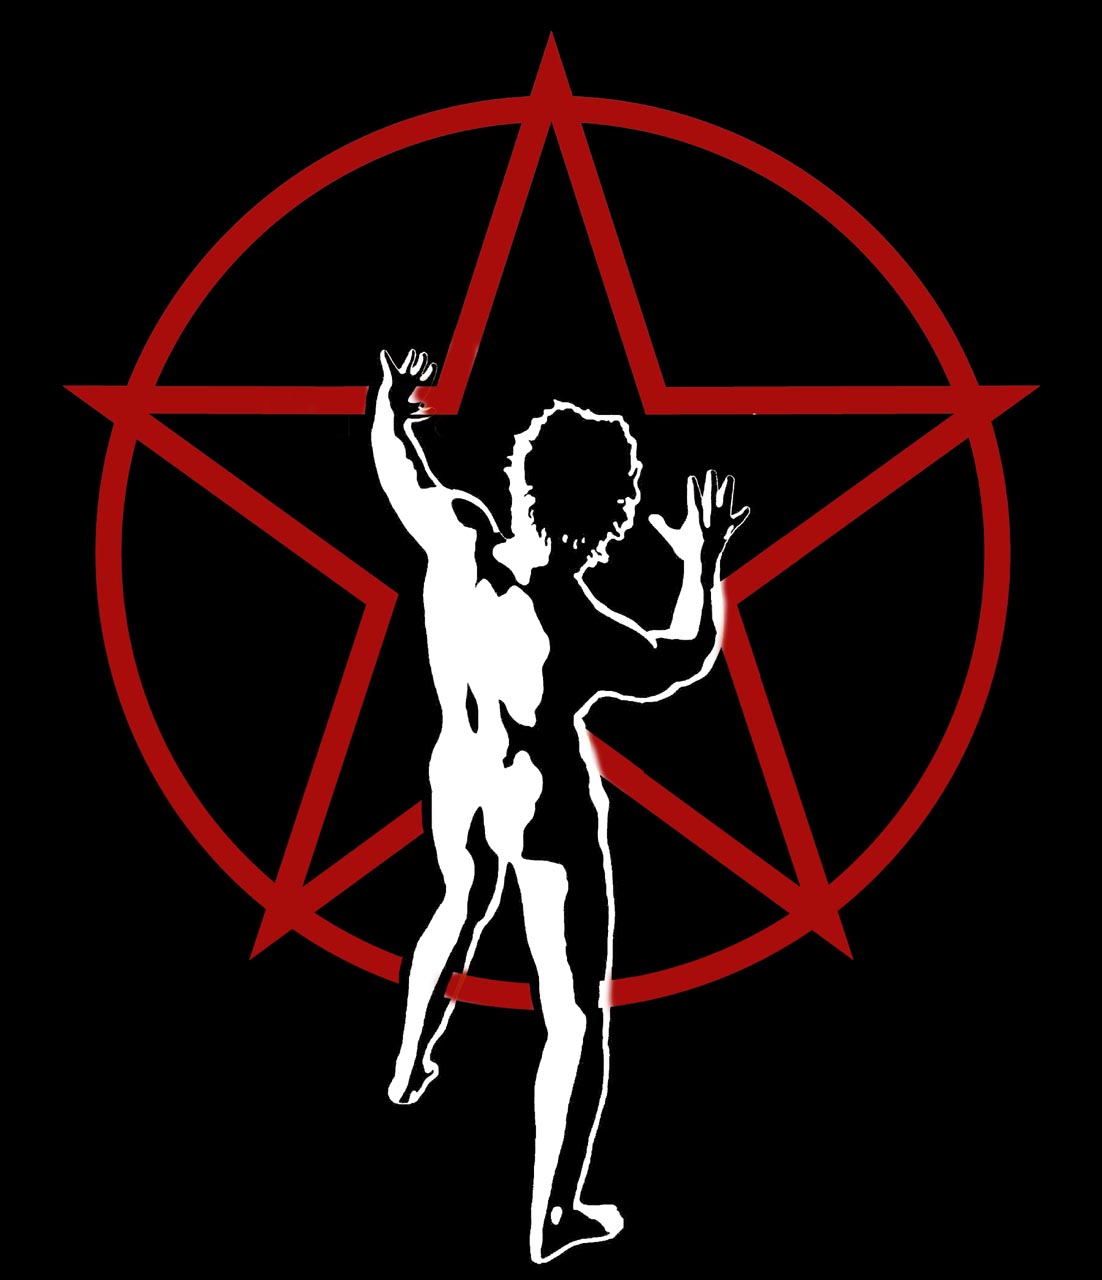 strarman-logo-red-star.jpg